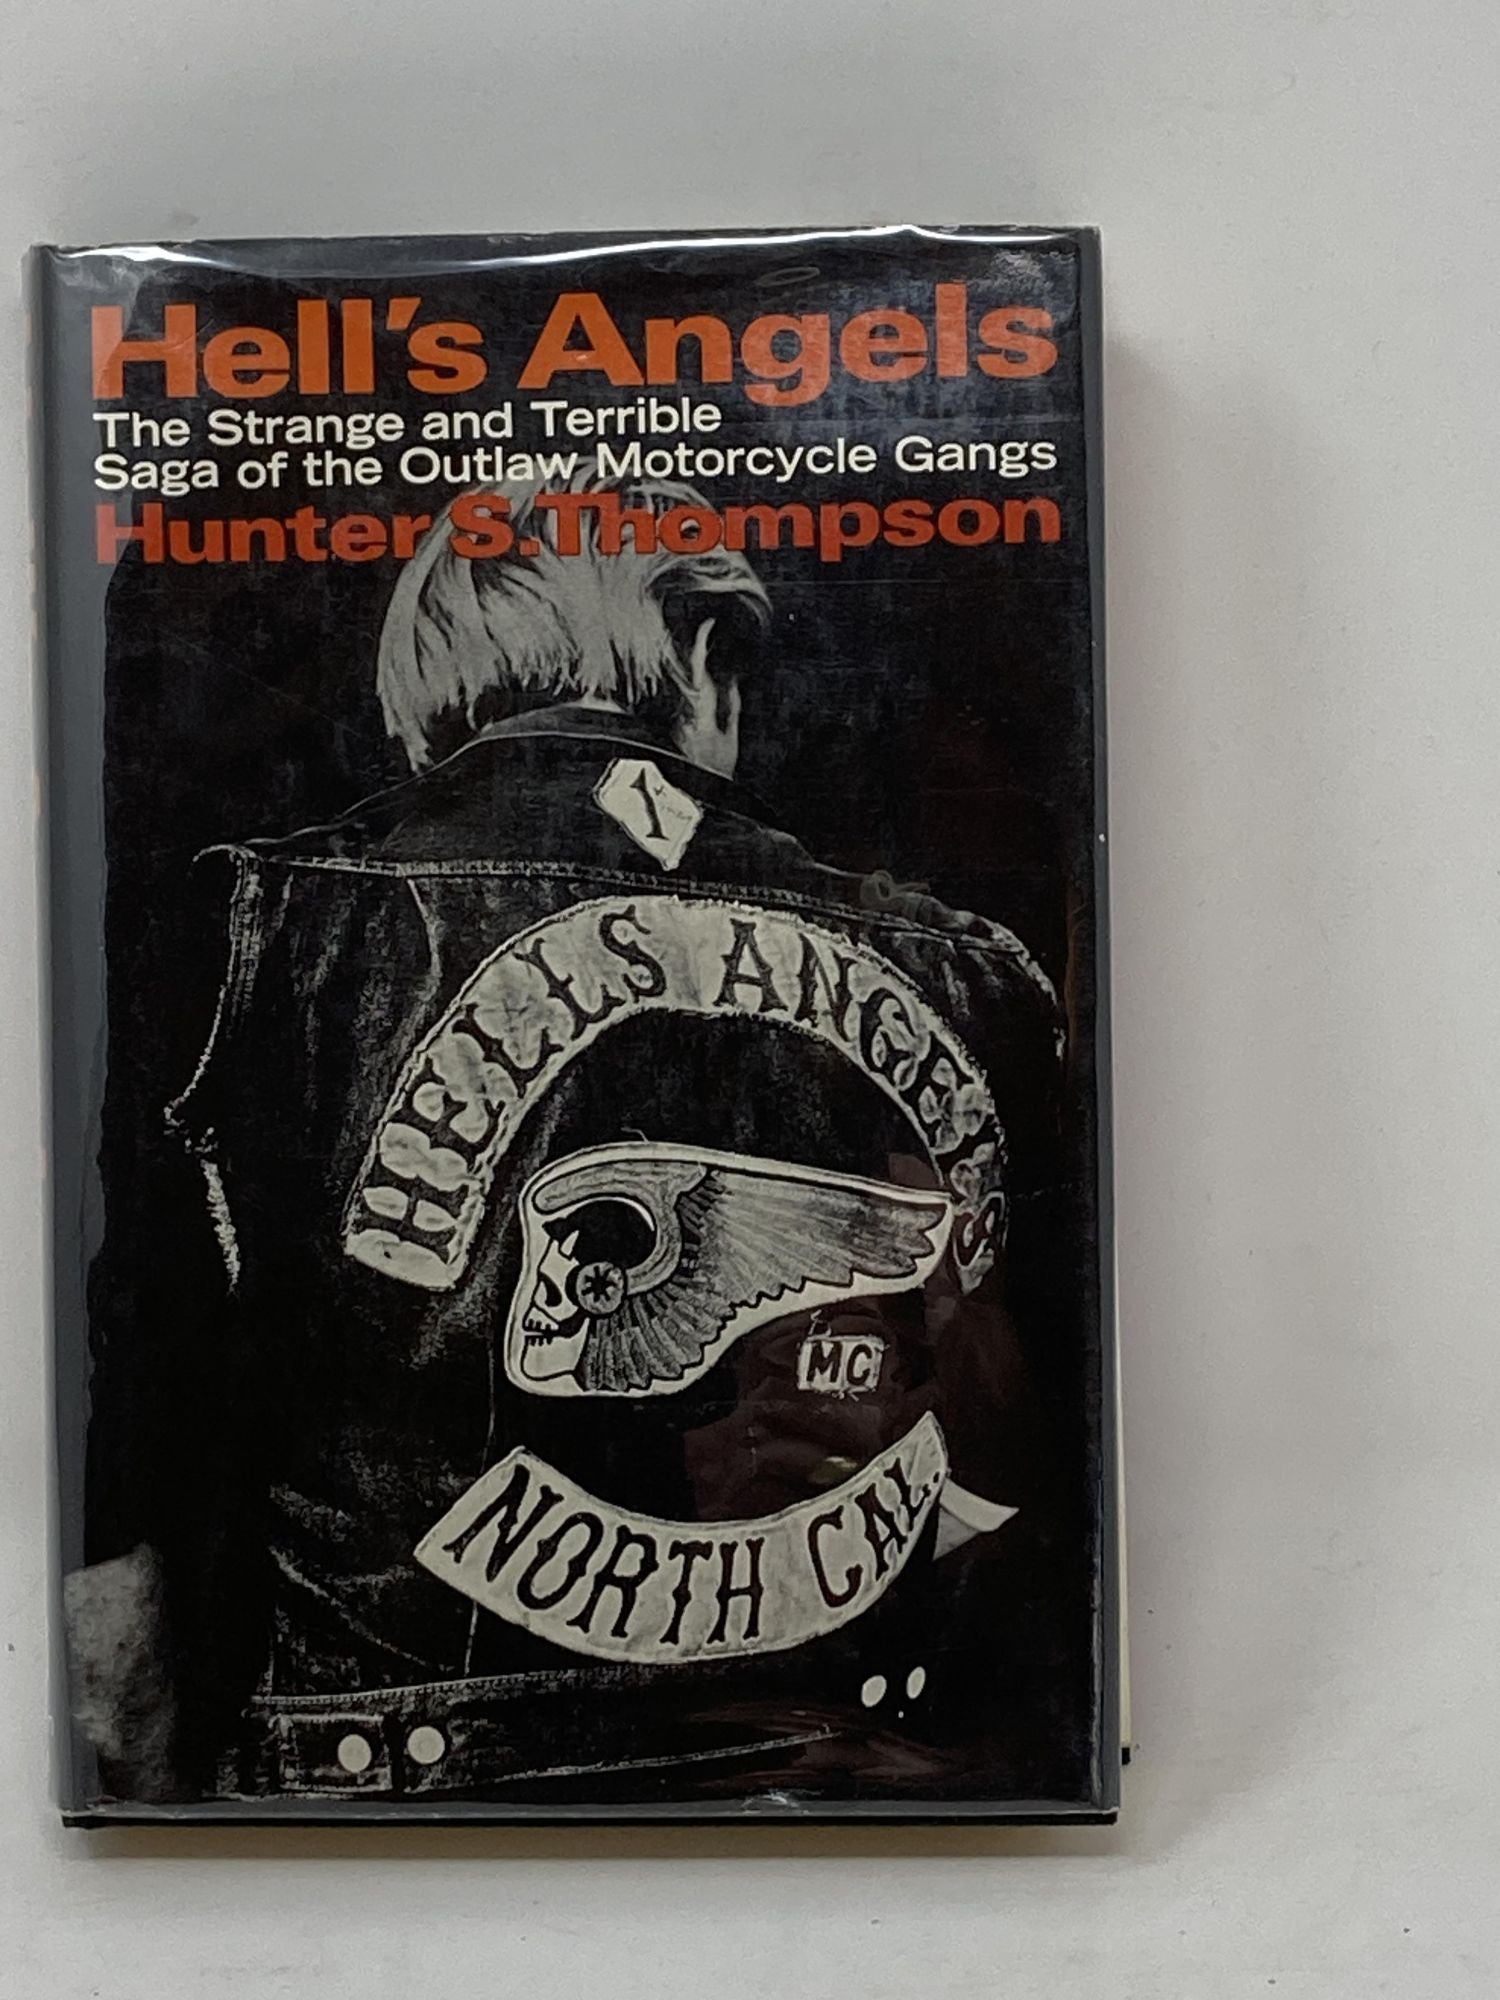 Thompson, Hunter S. - Hell's Angels : A Strange and Terrible Saga